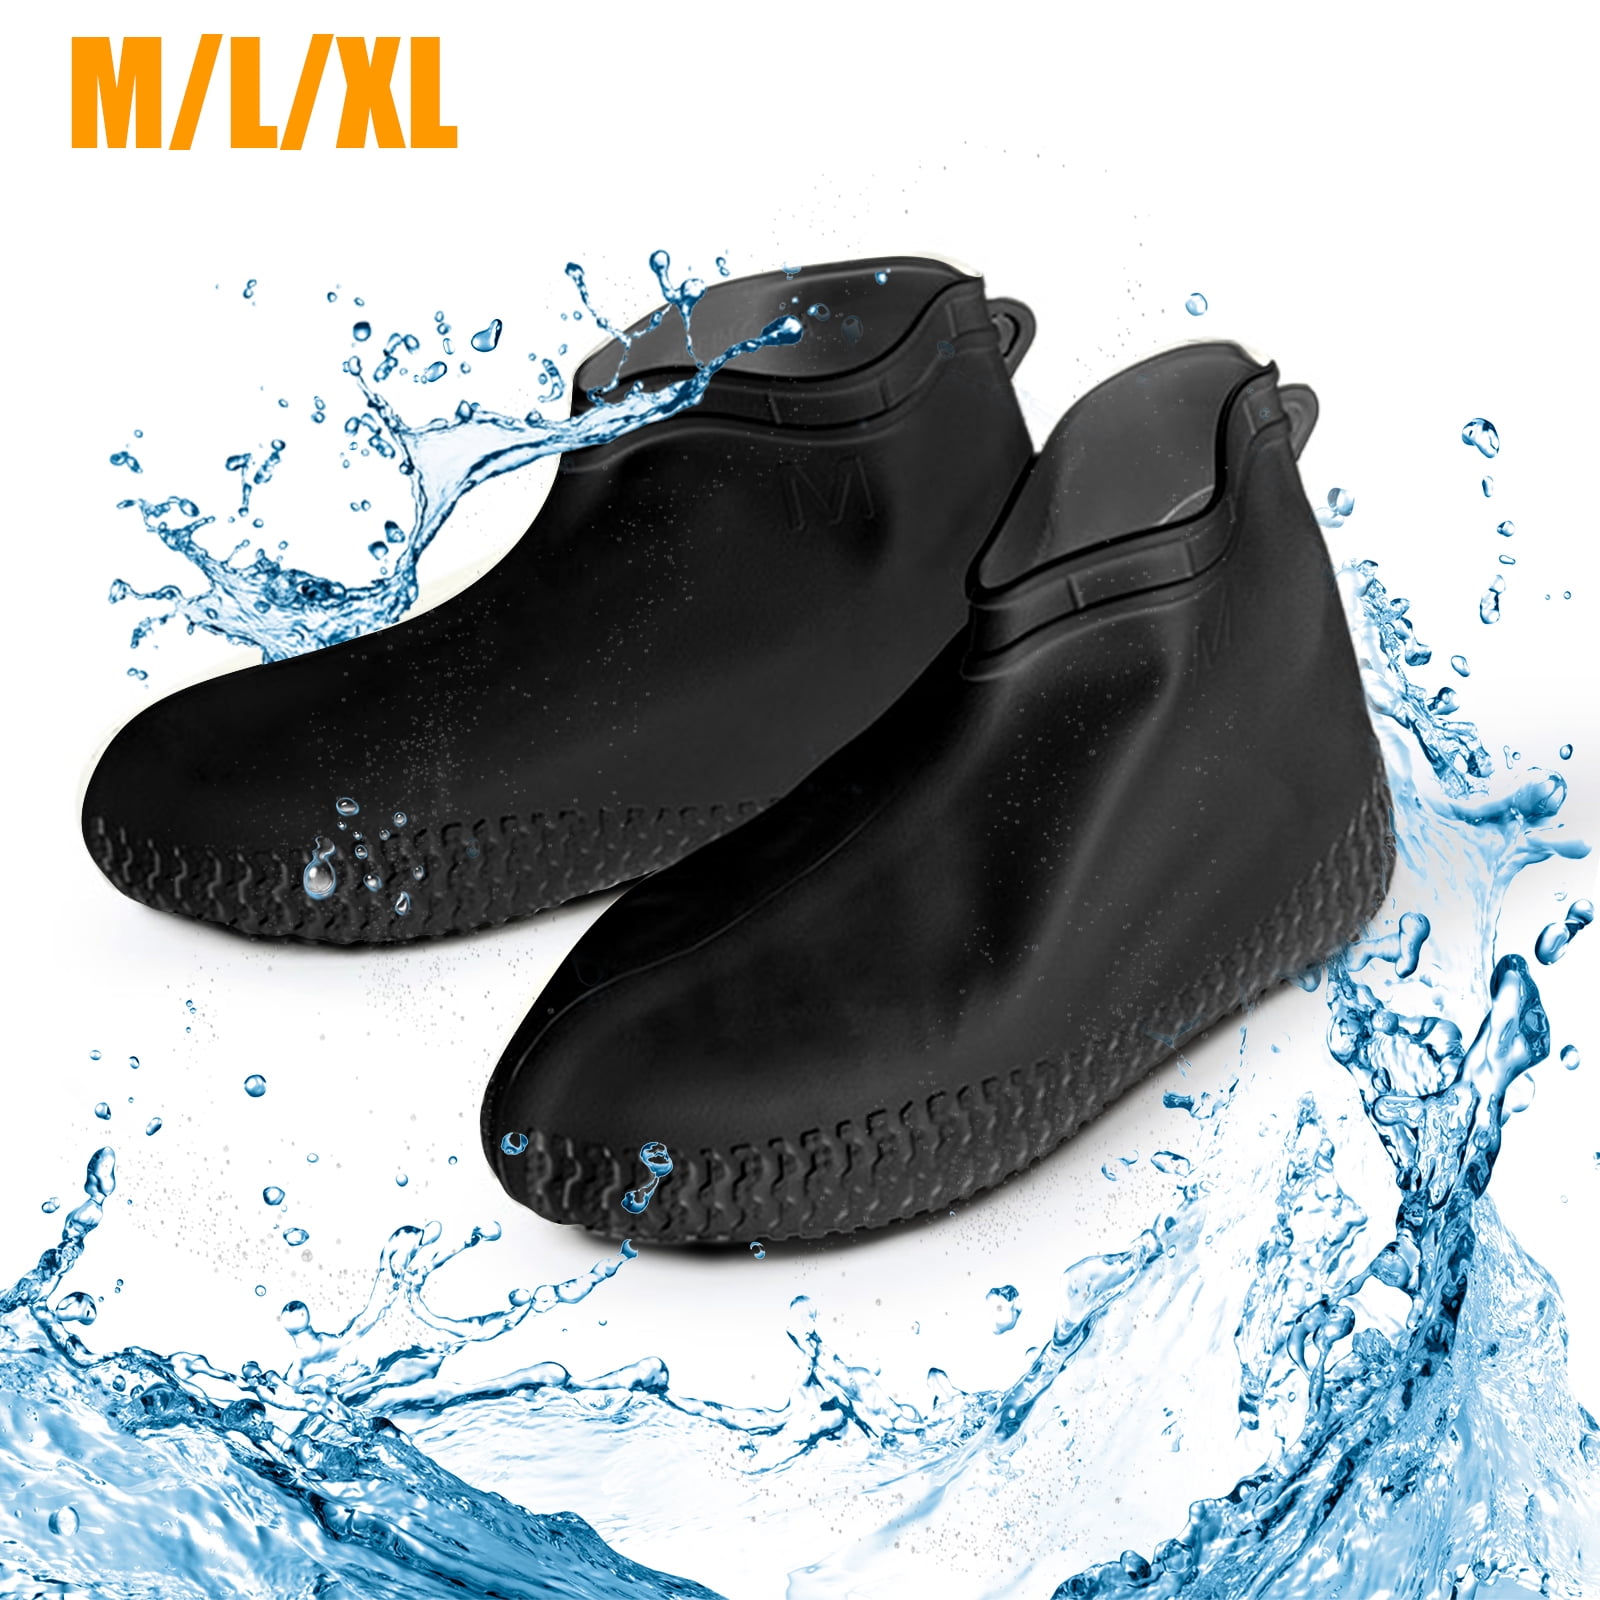 Silicone Overshoes Reusable Waterproof Non-slip Rain Boot Shoes Covers Women/Men 